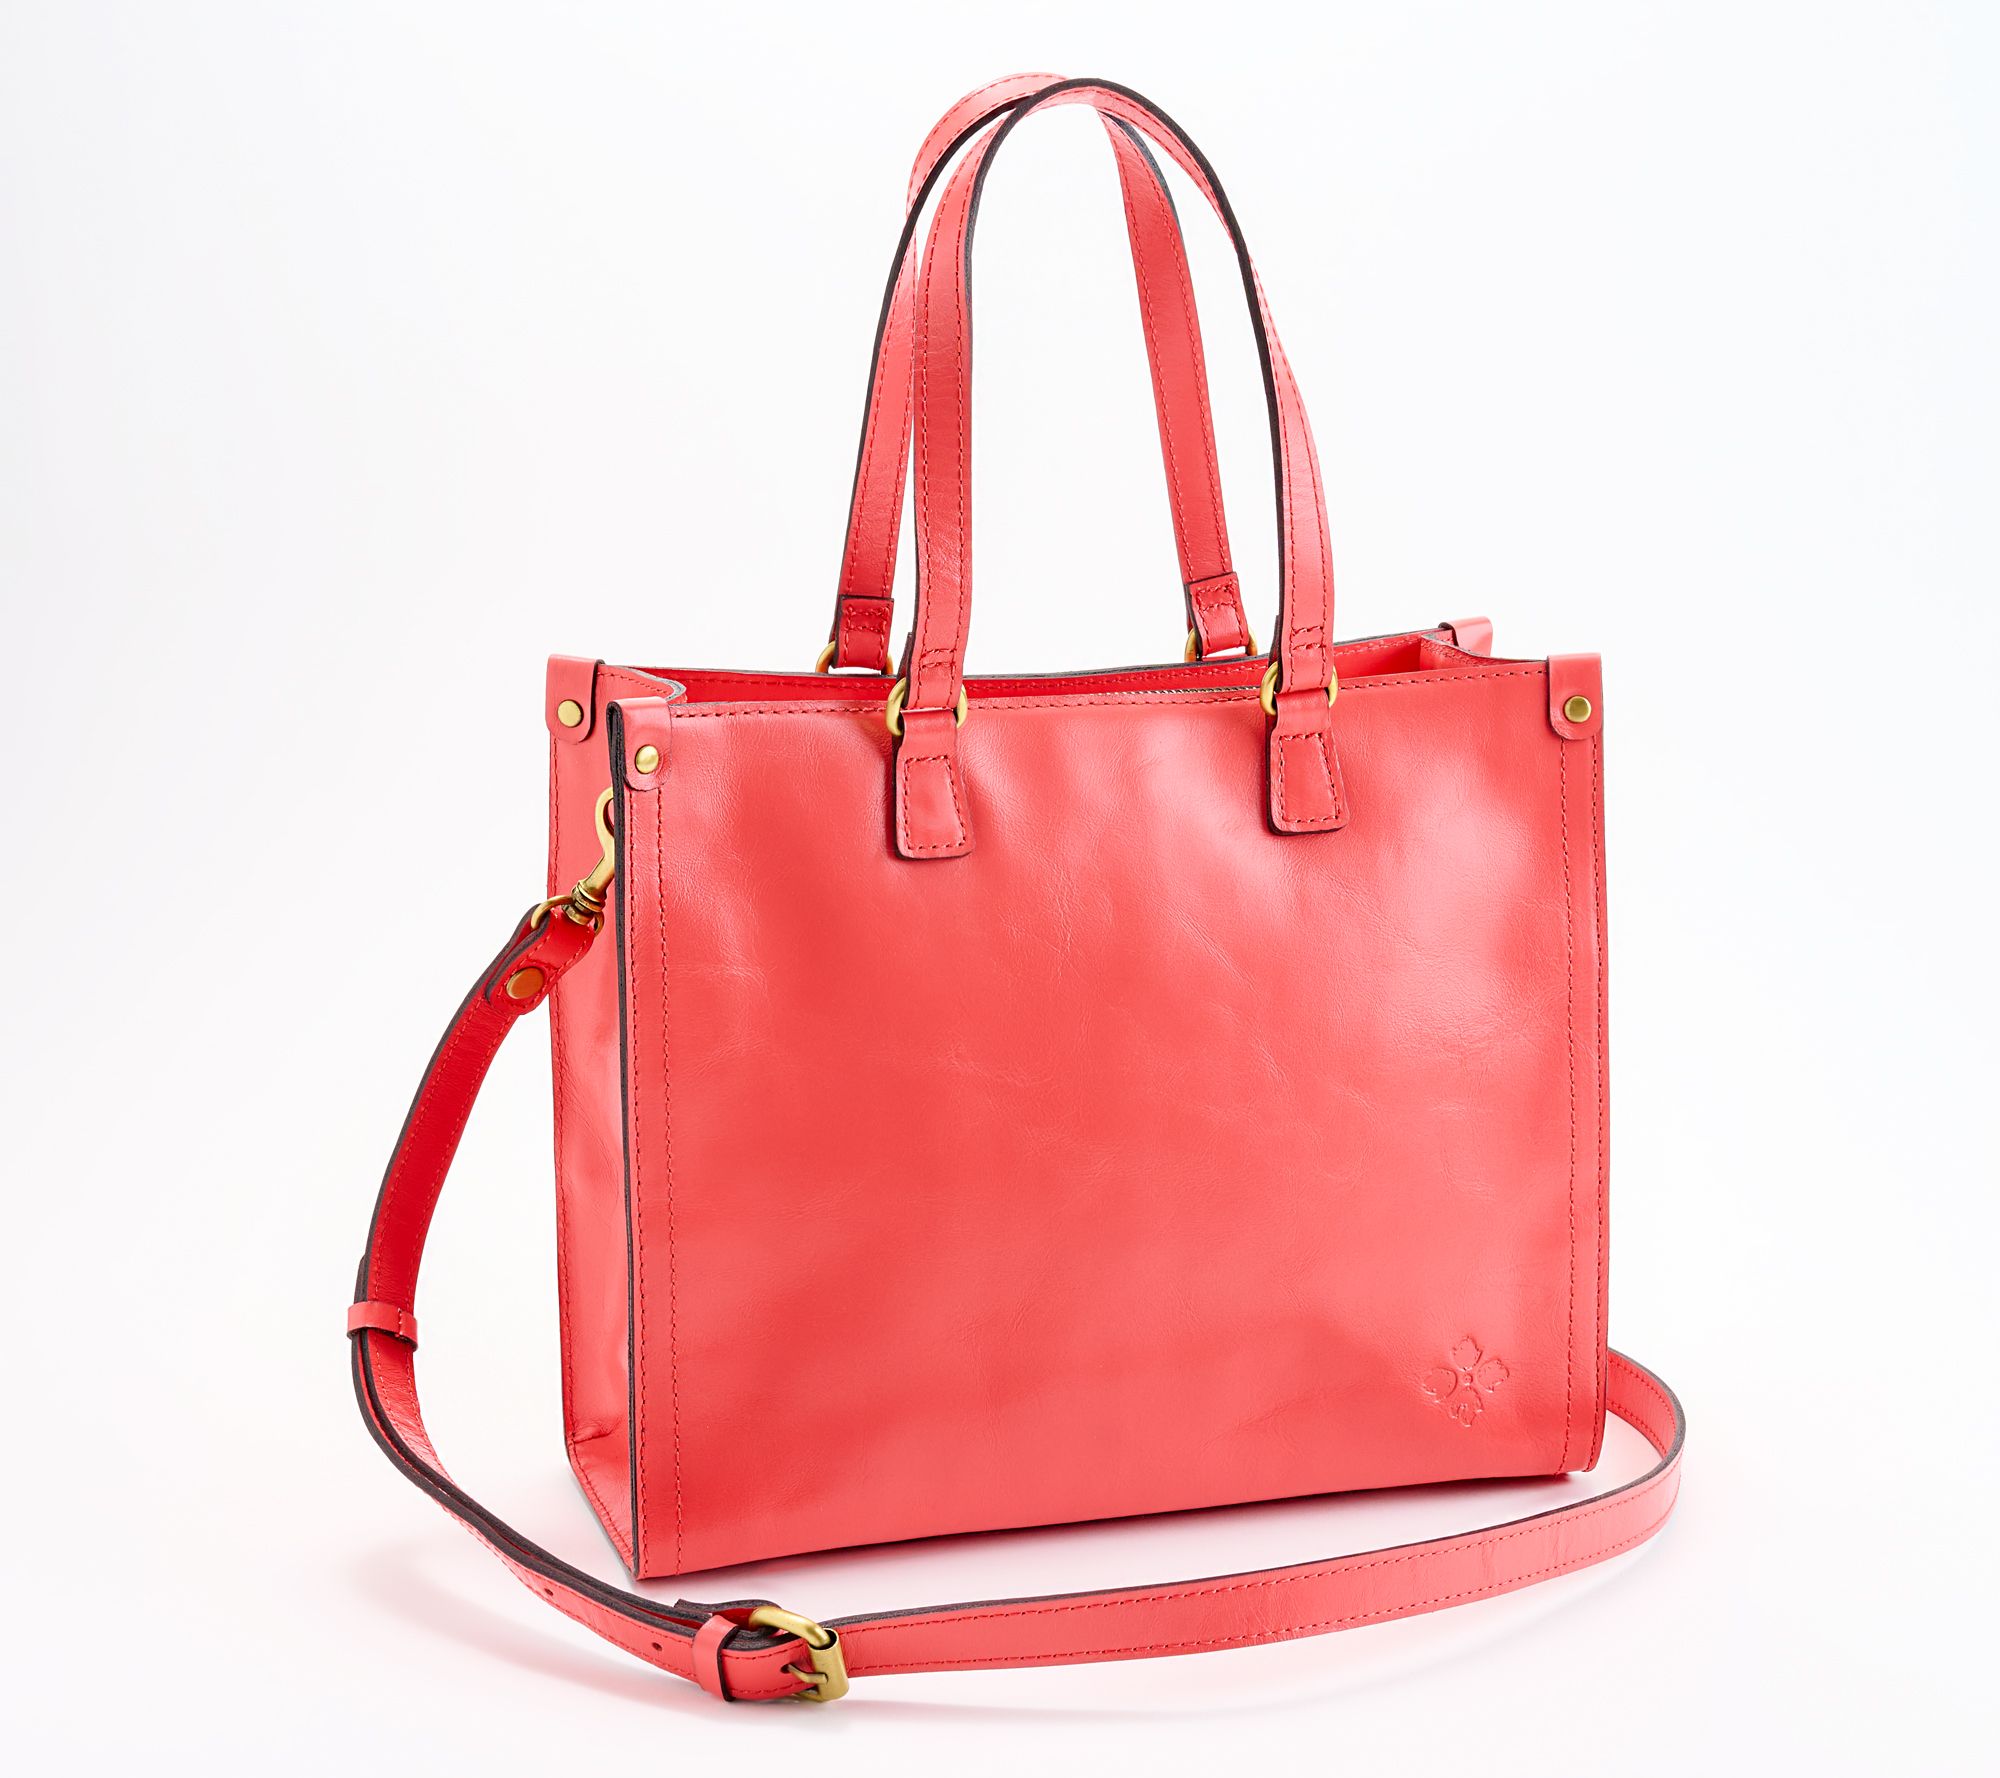 Kate Spade Ella Tote Leather Handbag Review - Live & Work Smart